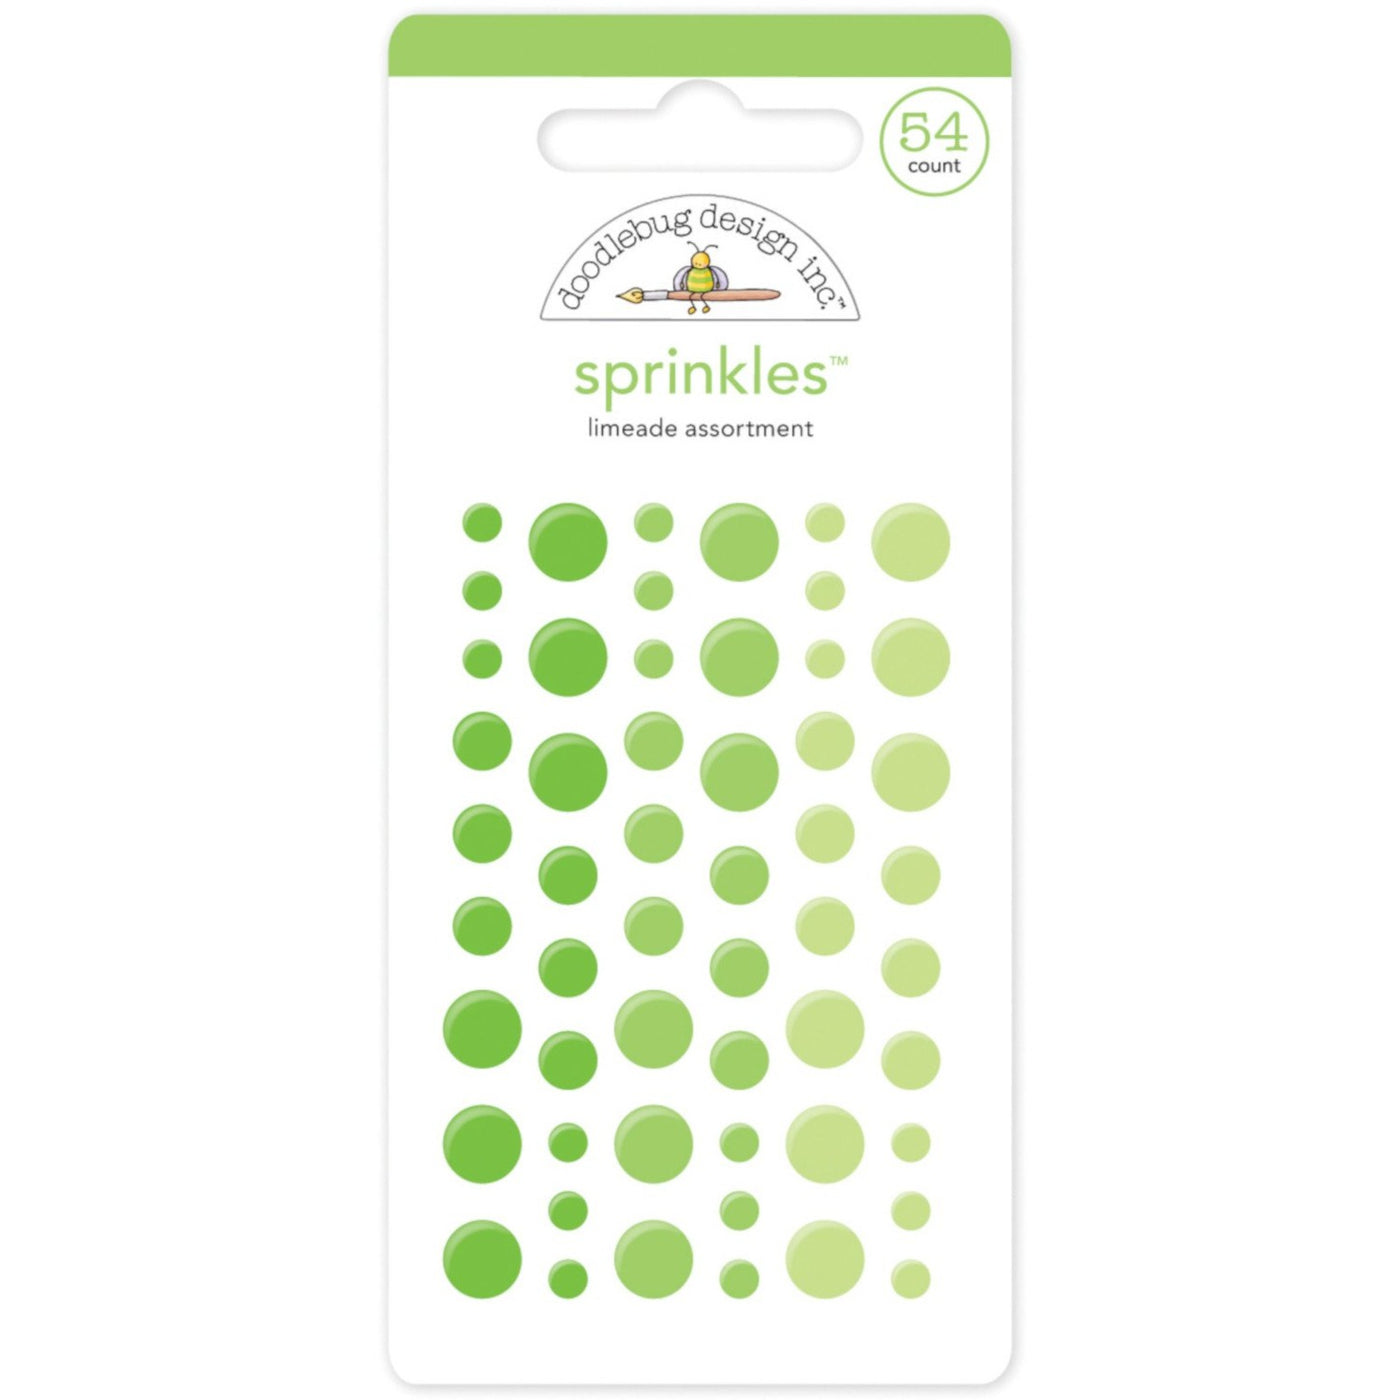 LIMEADE Sprinkles - 54 assorted, self-adhesive enamel dots in 3 colors by Doodlebug Design